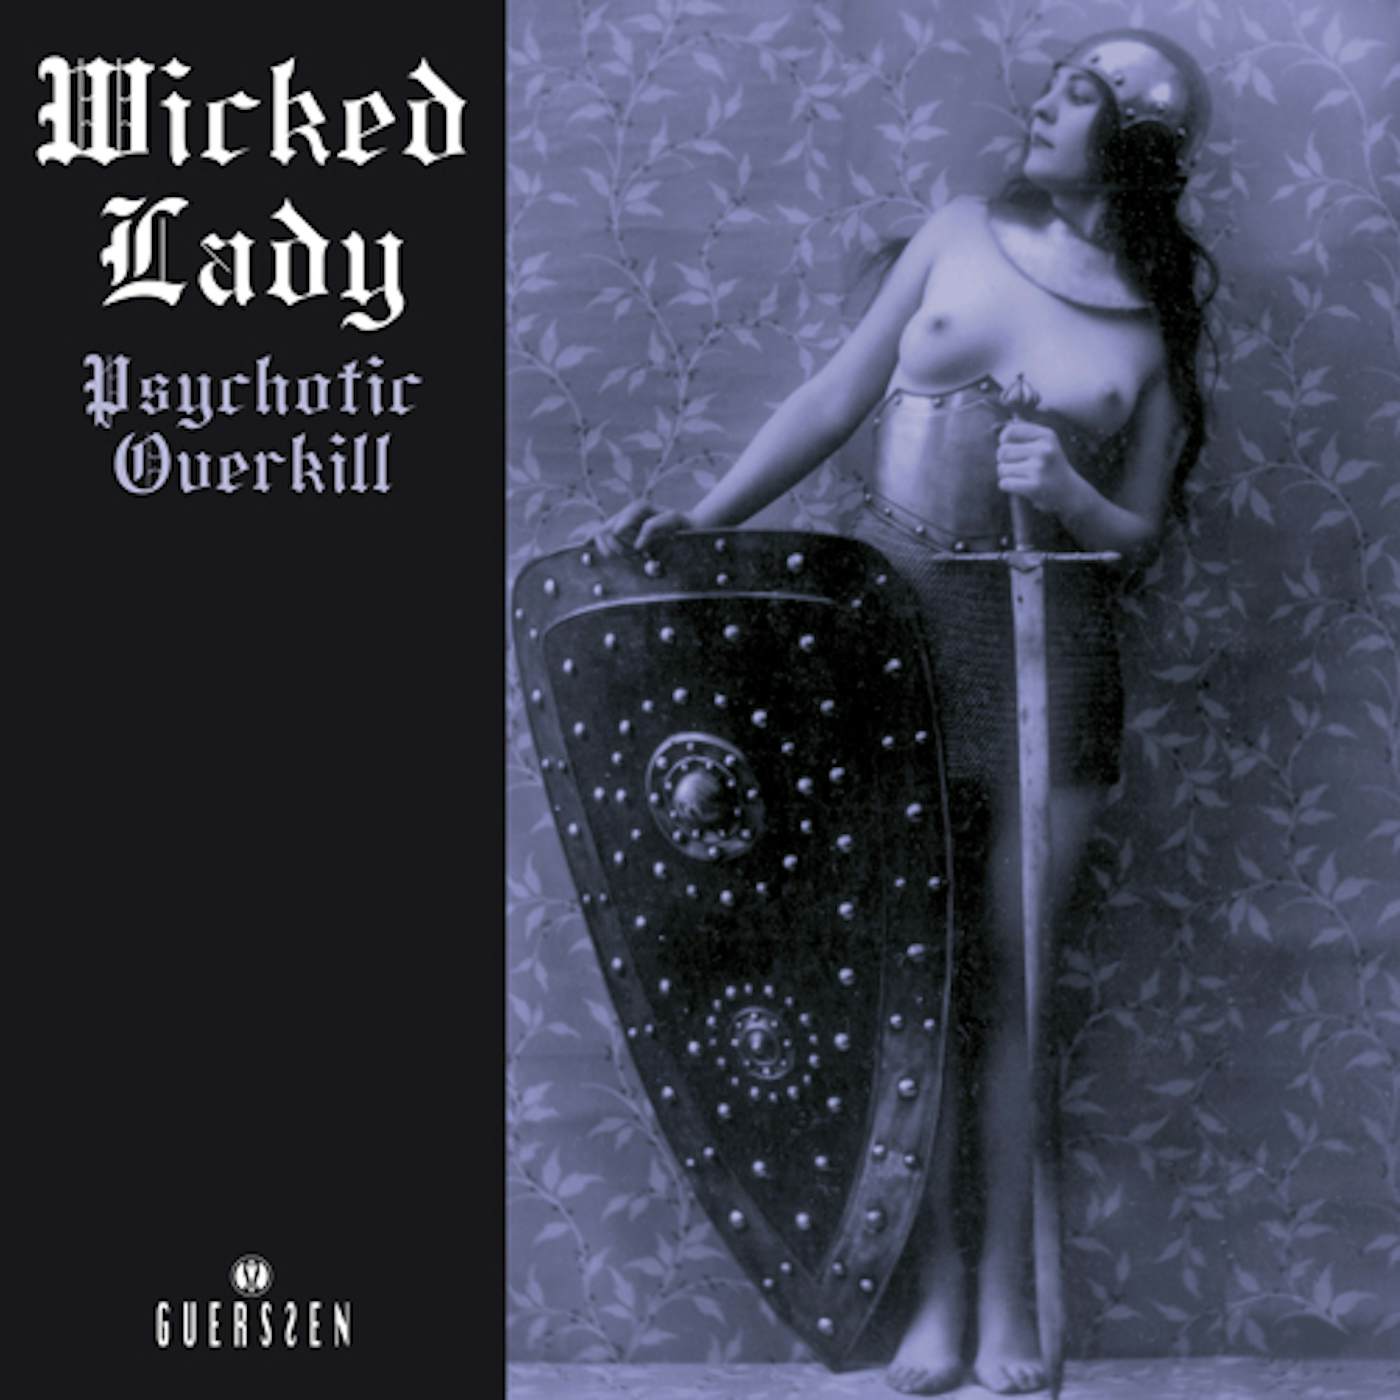 Wicked Lady Psychotic Overkill Vinyl Record